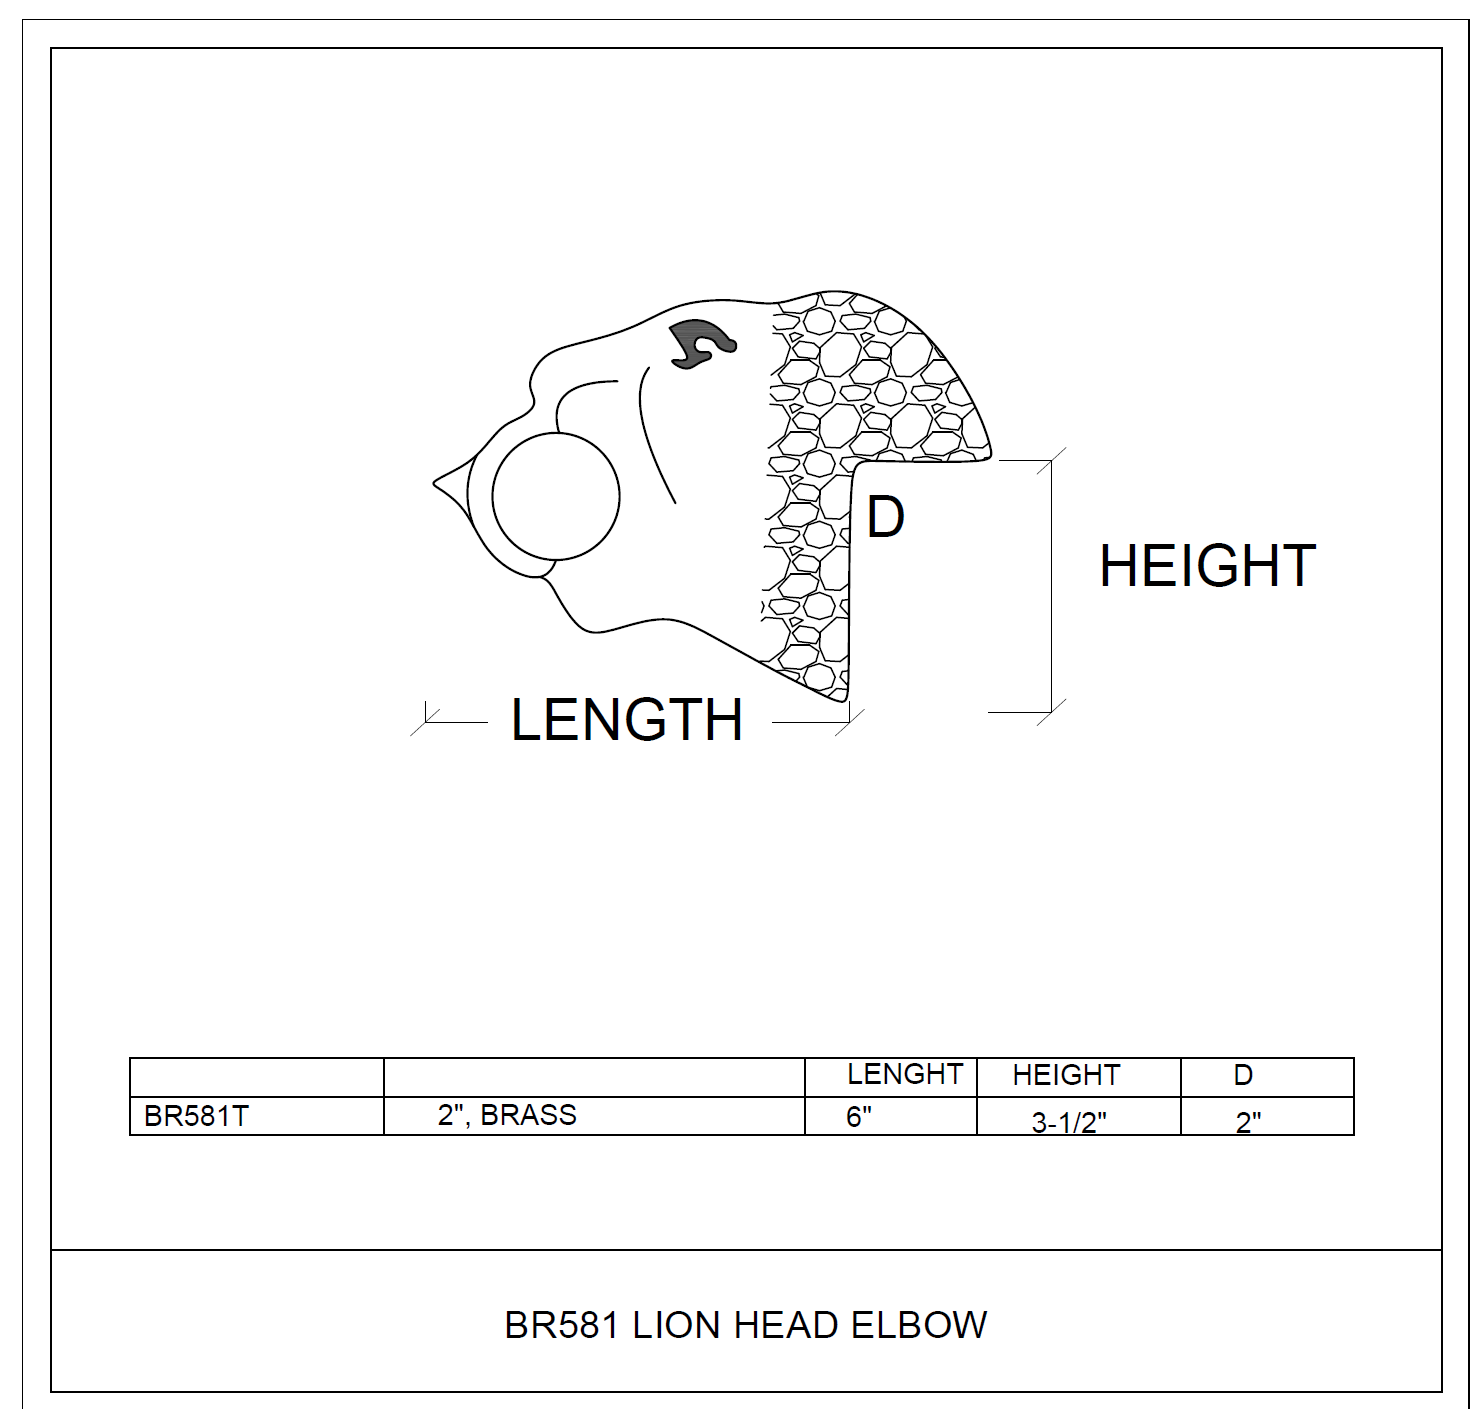 Lion Head Arm Rail Bracket 2.0" - All finishes